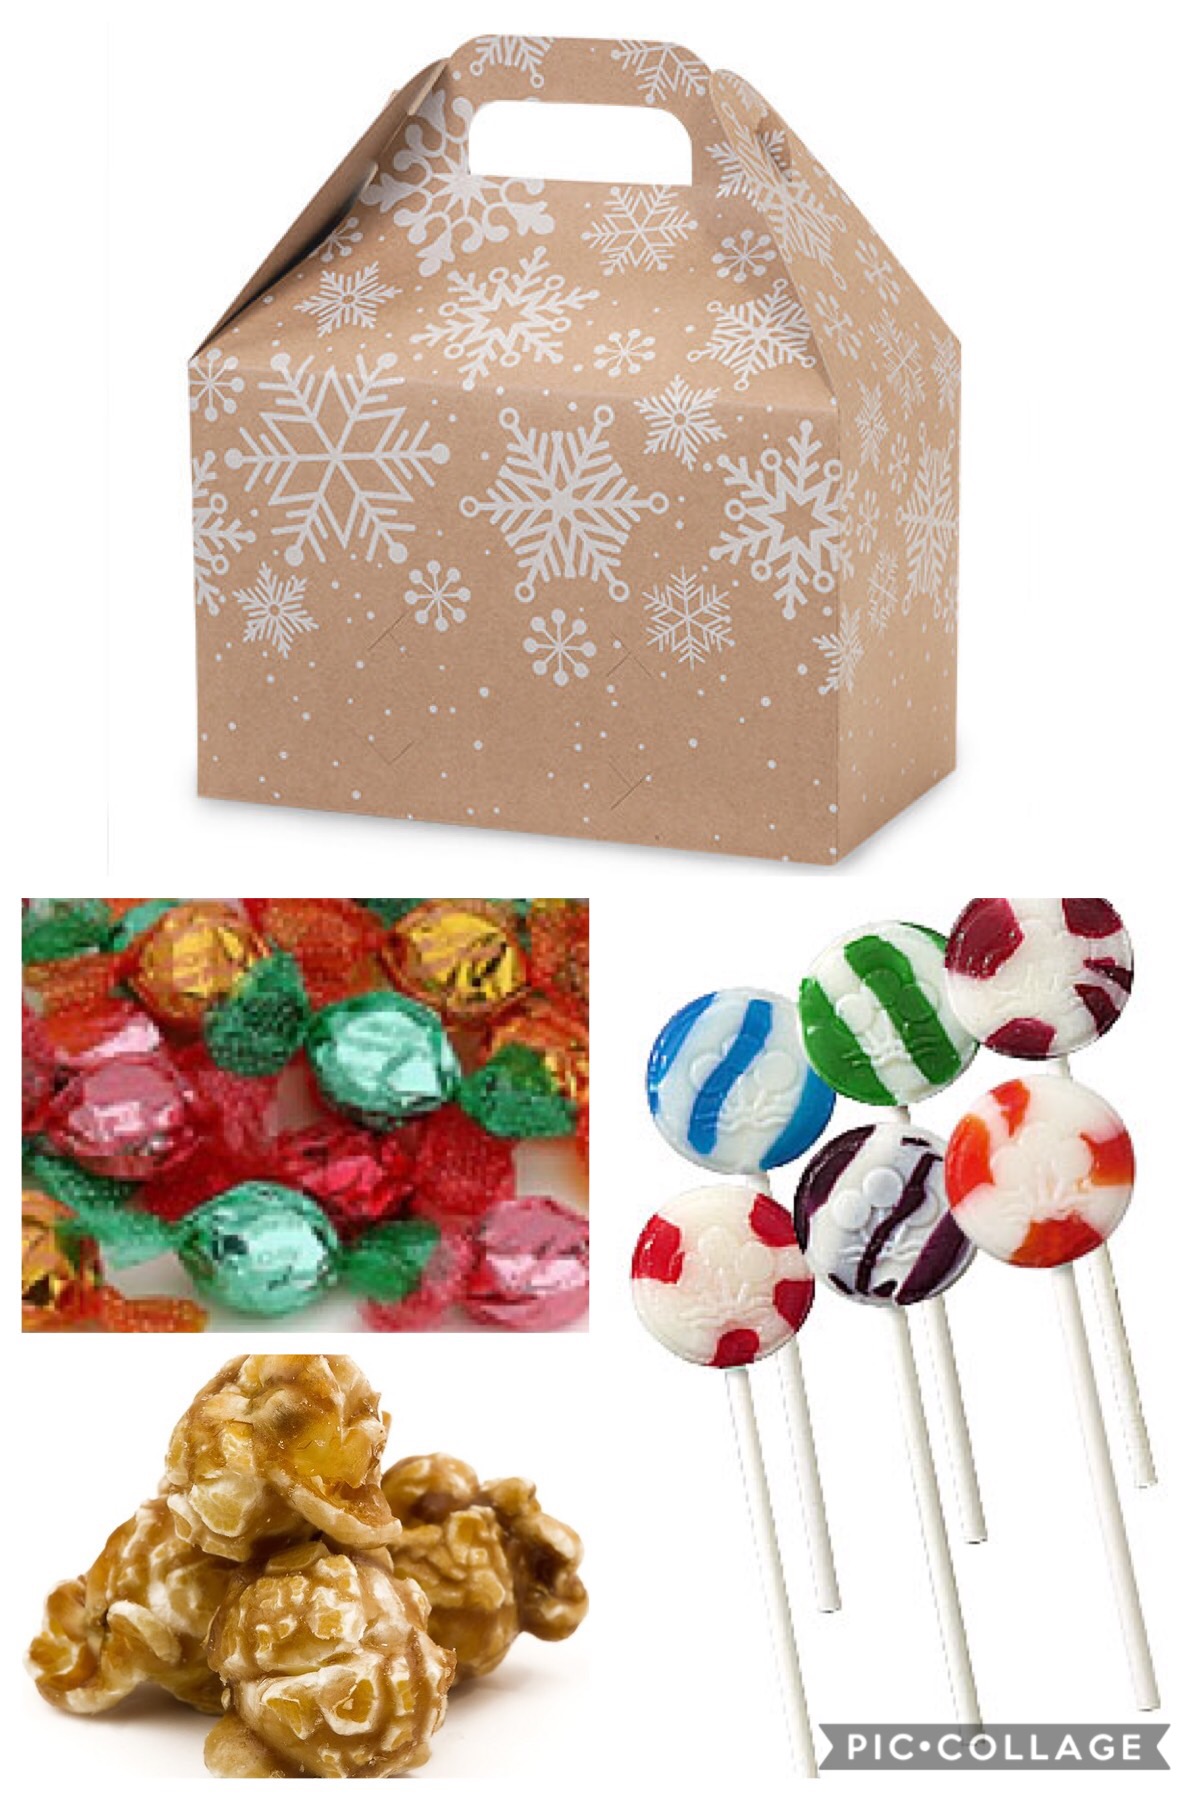 Winter Wonderland Gift Box Sugar free